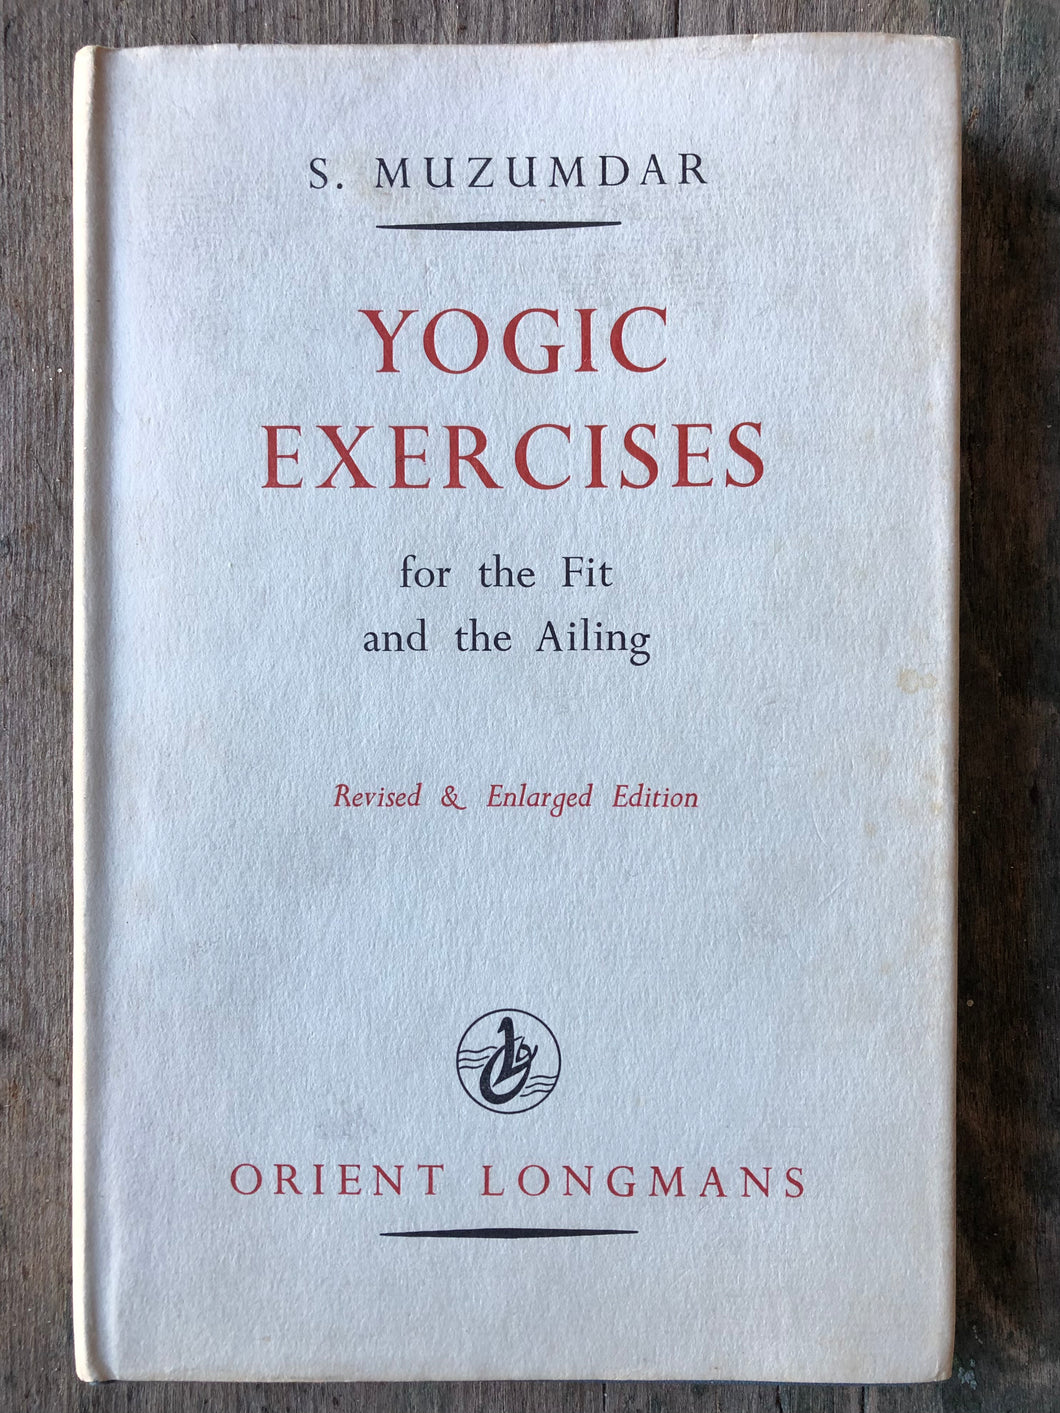 Yogic Exercises by S. Muzumdar